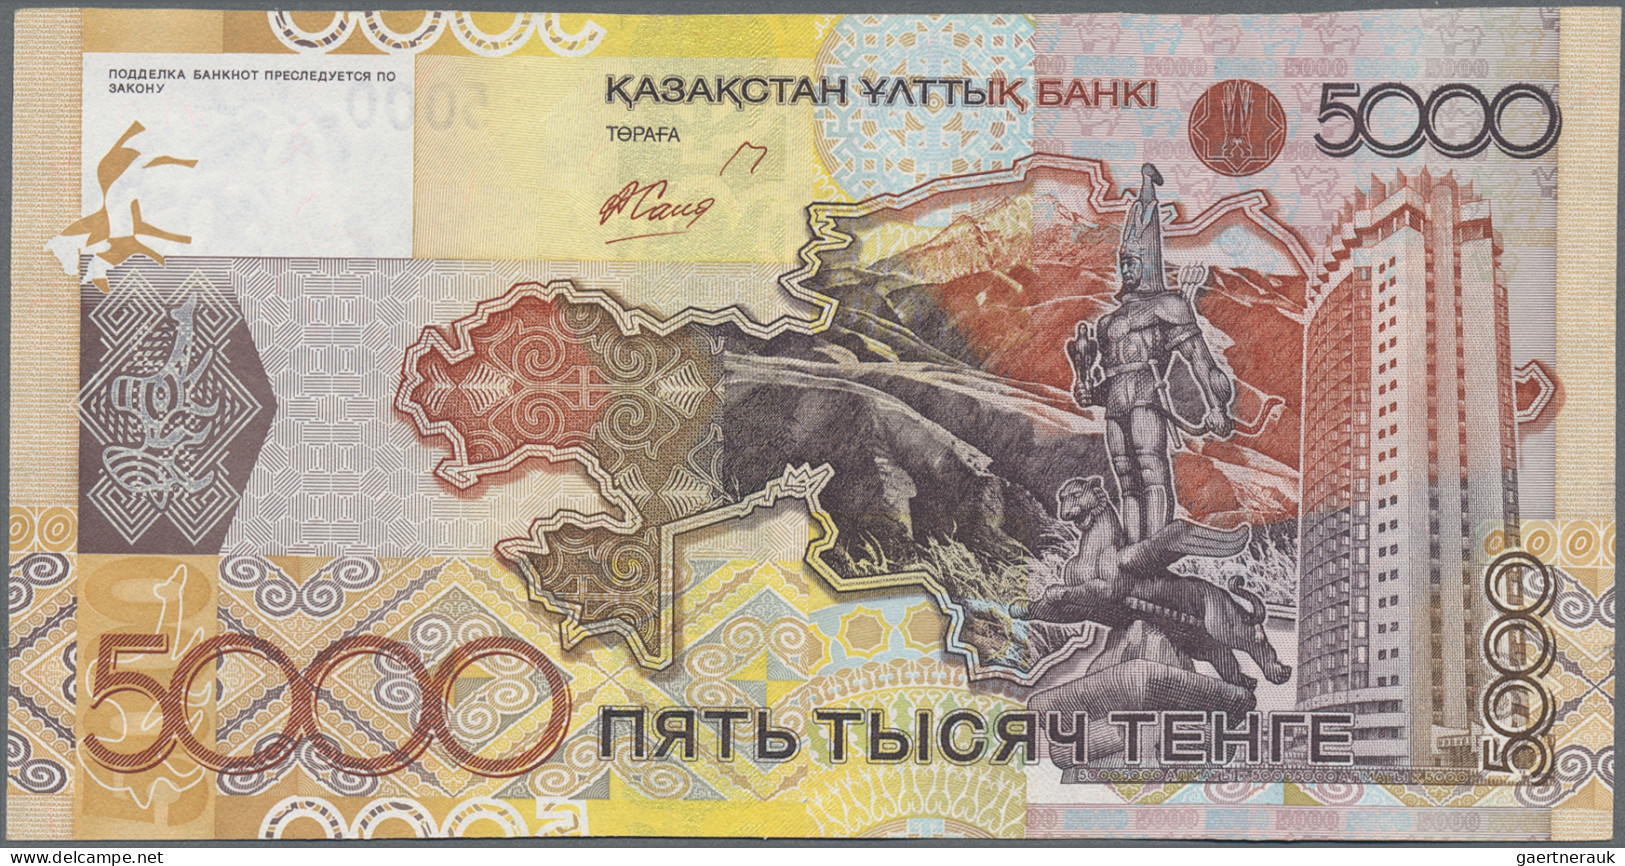 Kazakhstan: National Bank of Kazakhstan, huge lot with 28 banknotes, series 1993